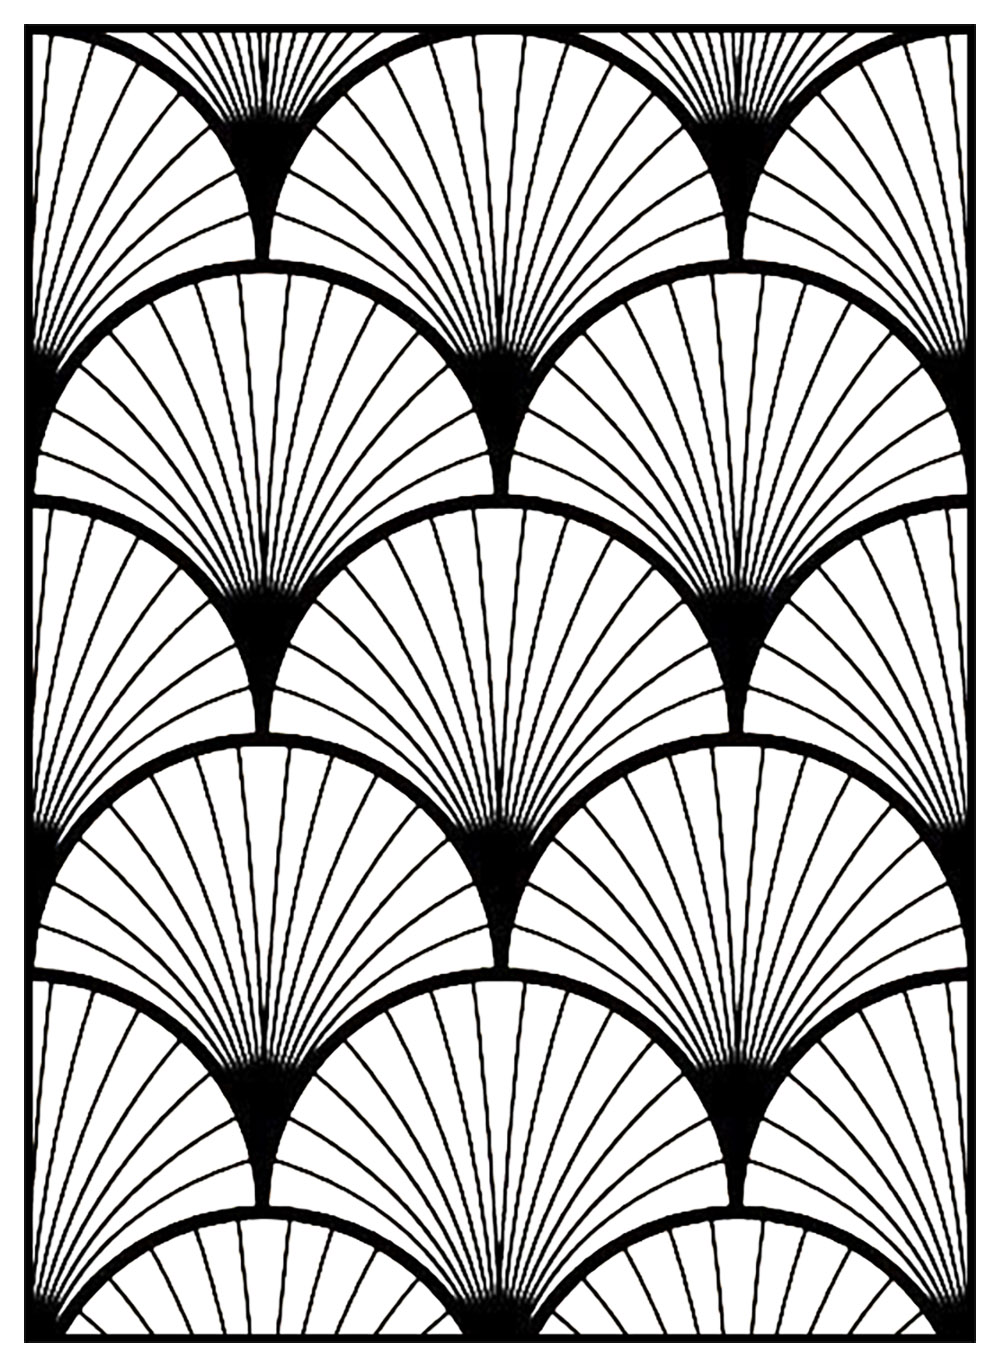 Download Geometric patterns art deco 3 - Art Deco Adult Coloring Pages